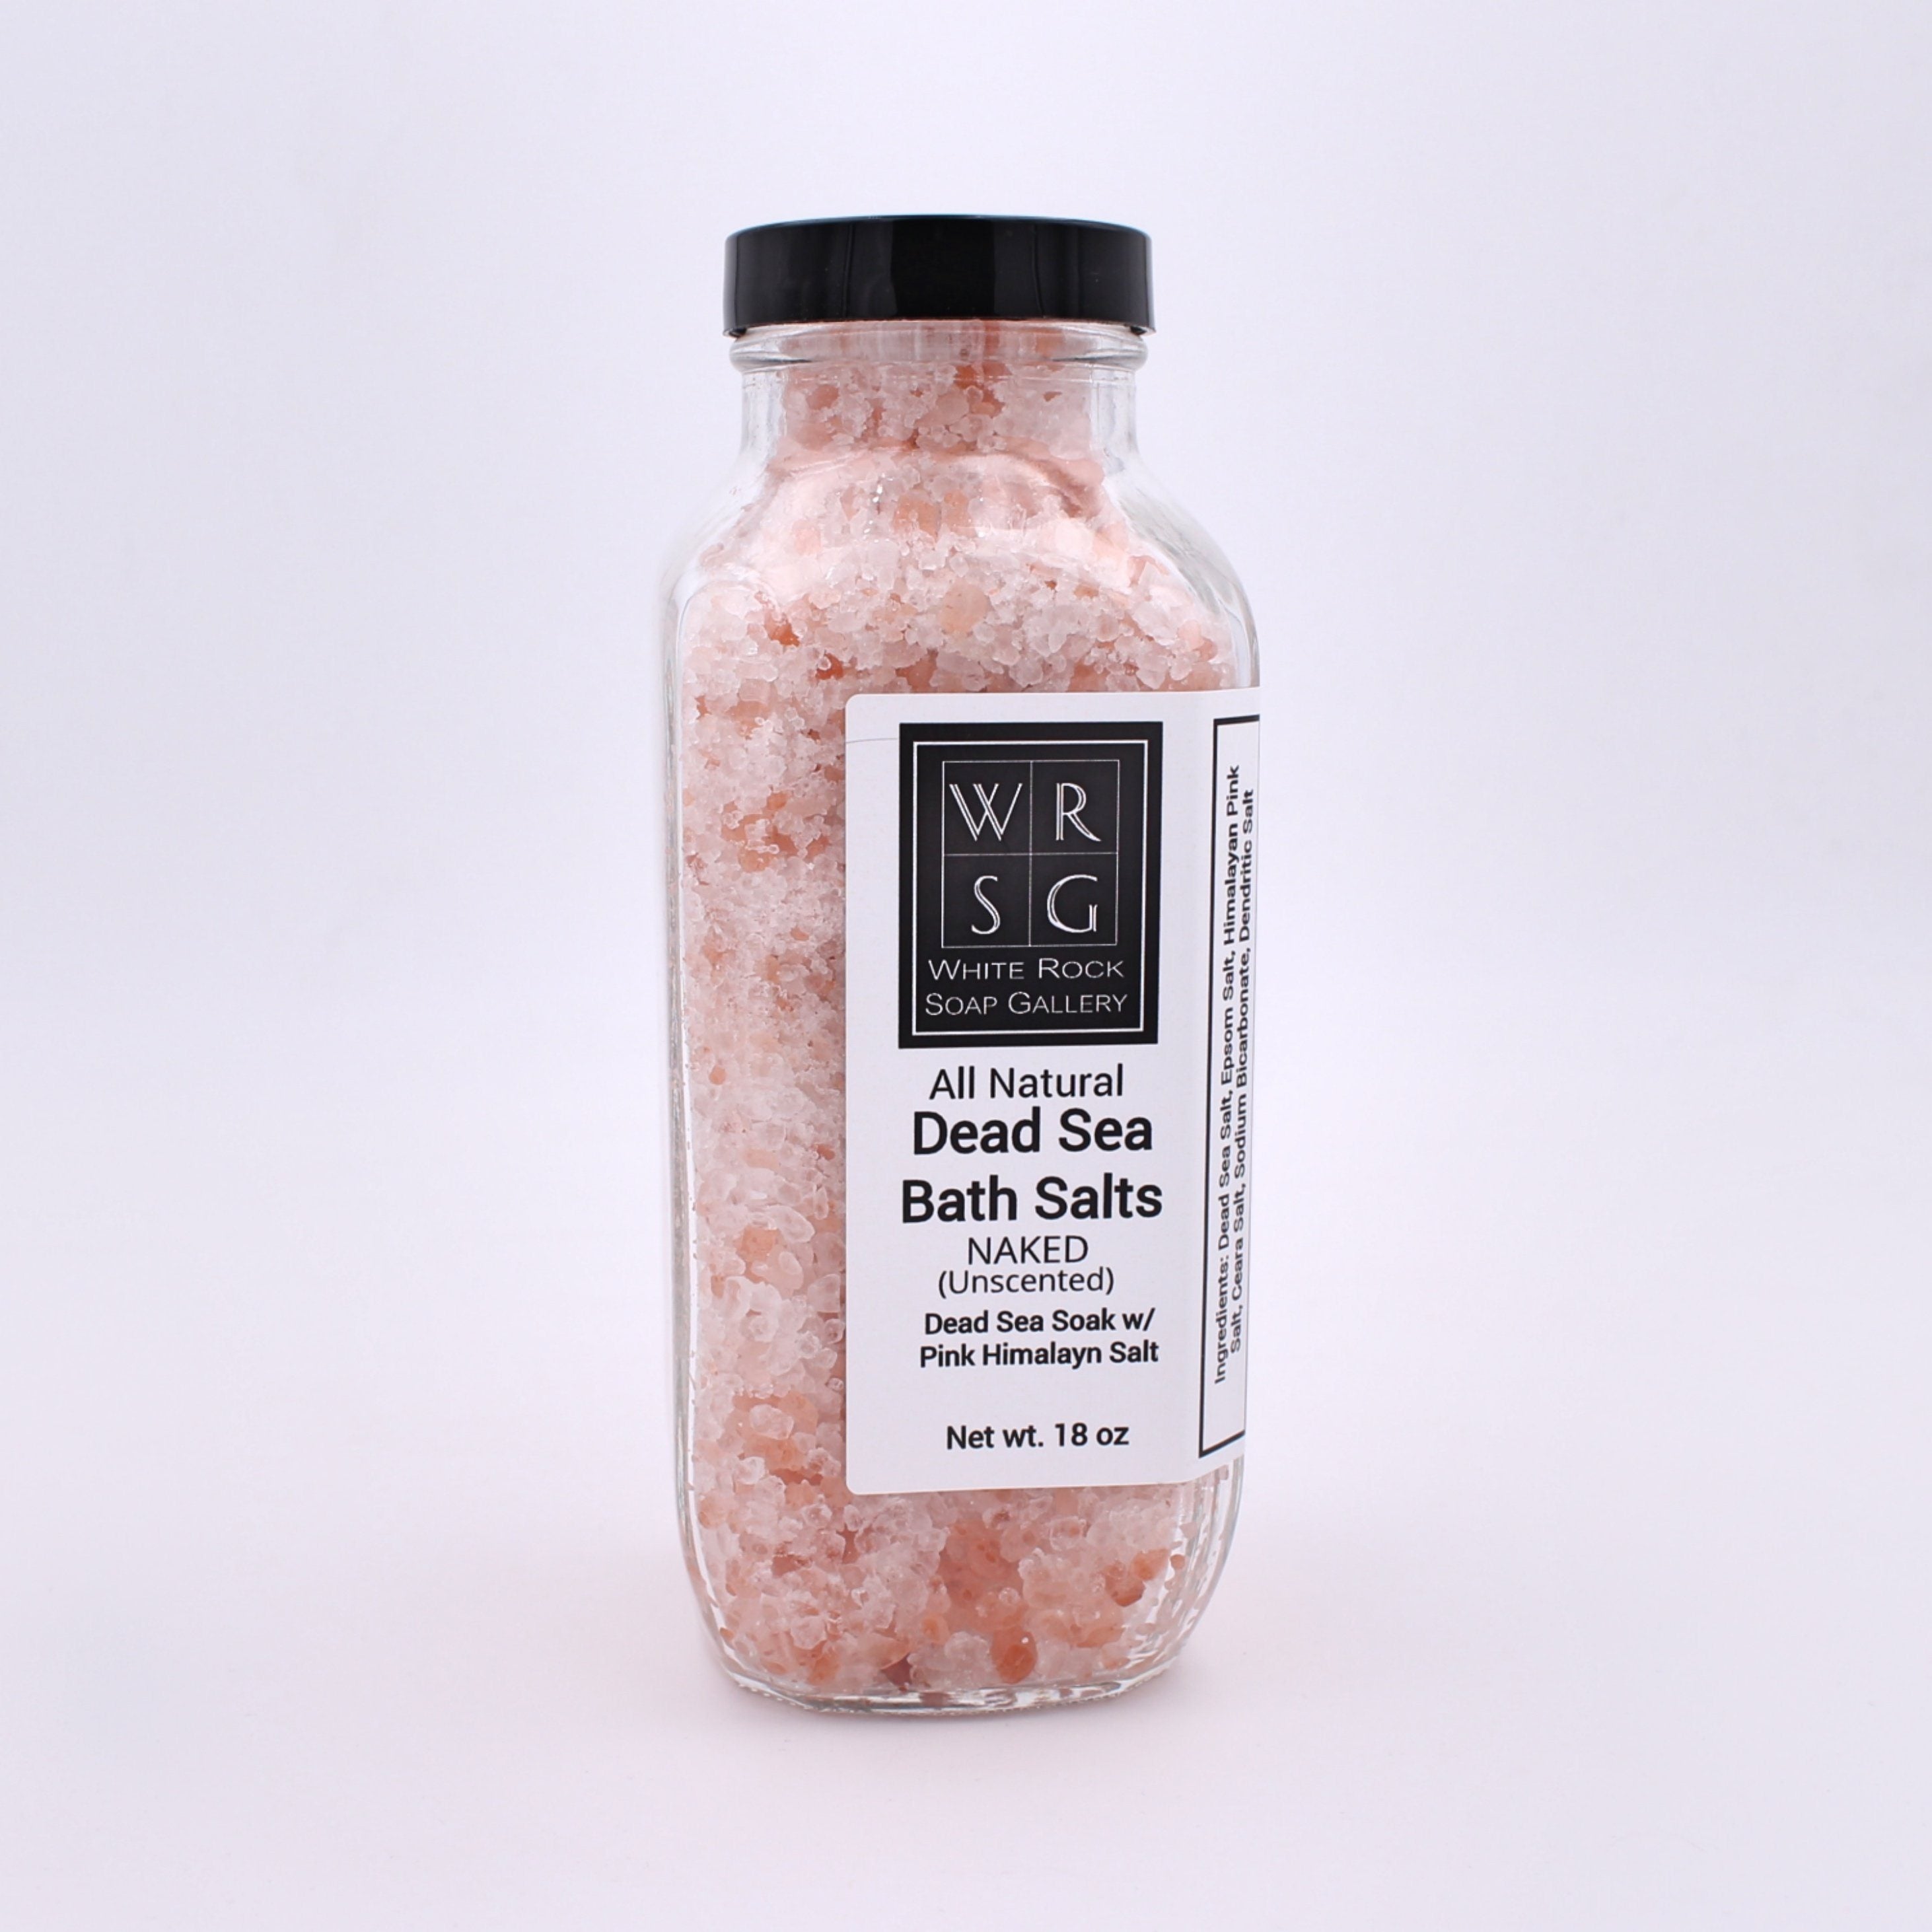 Unscented Sea Salt Soap - SALE! - Vunella